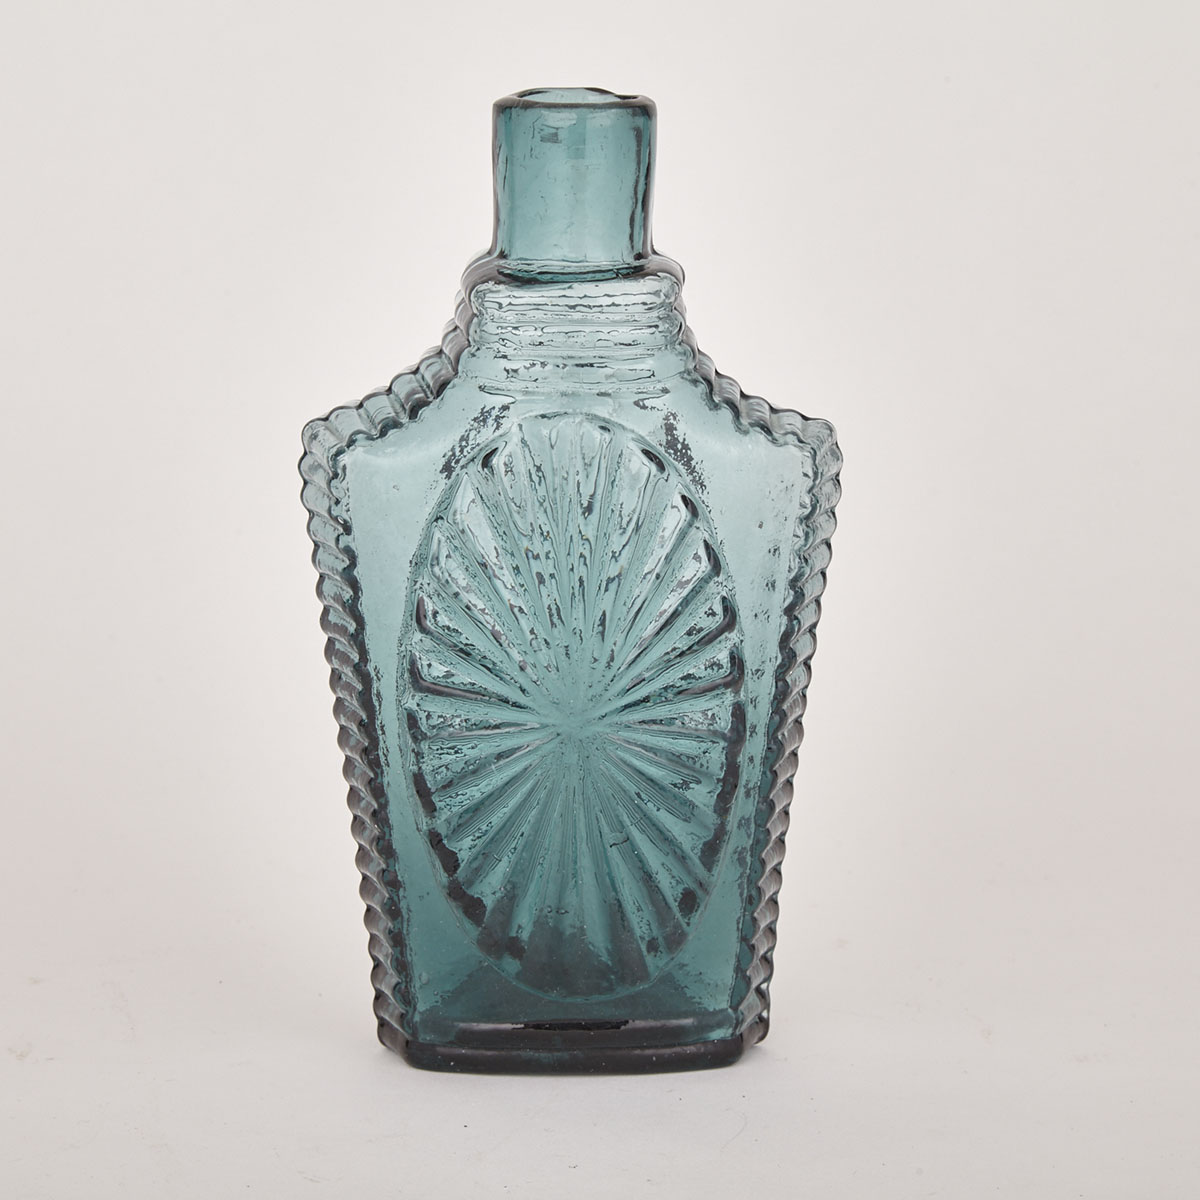 ‘Two Pounder’ Sunburst Flask,  Keene Marlboro Street Glassworks, Keene, New Hampshire, 1815-1830